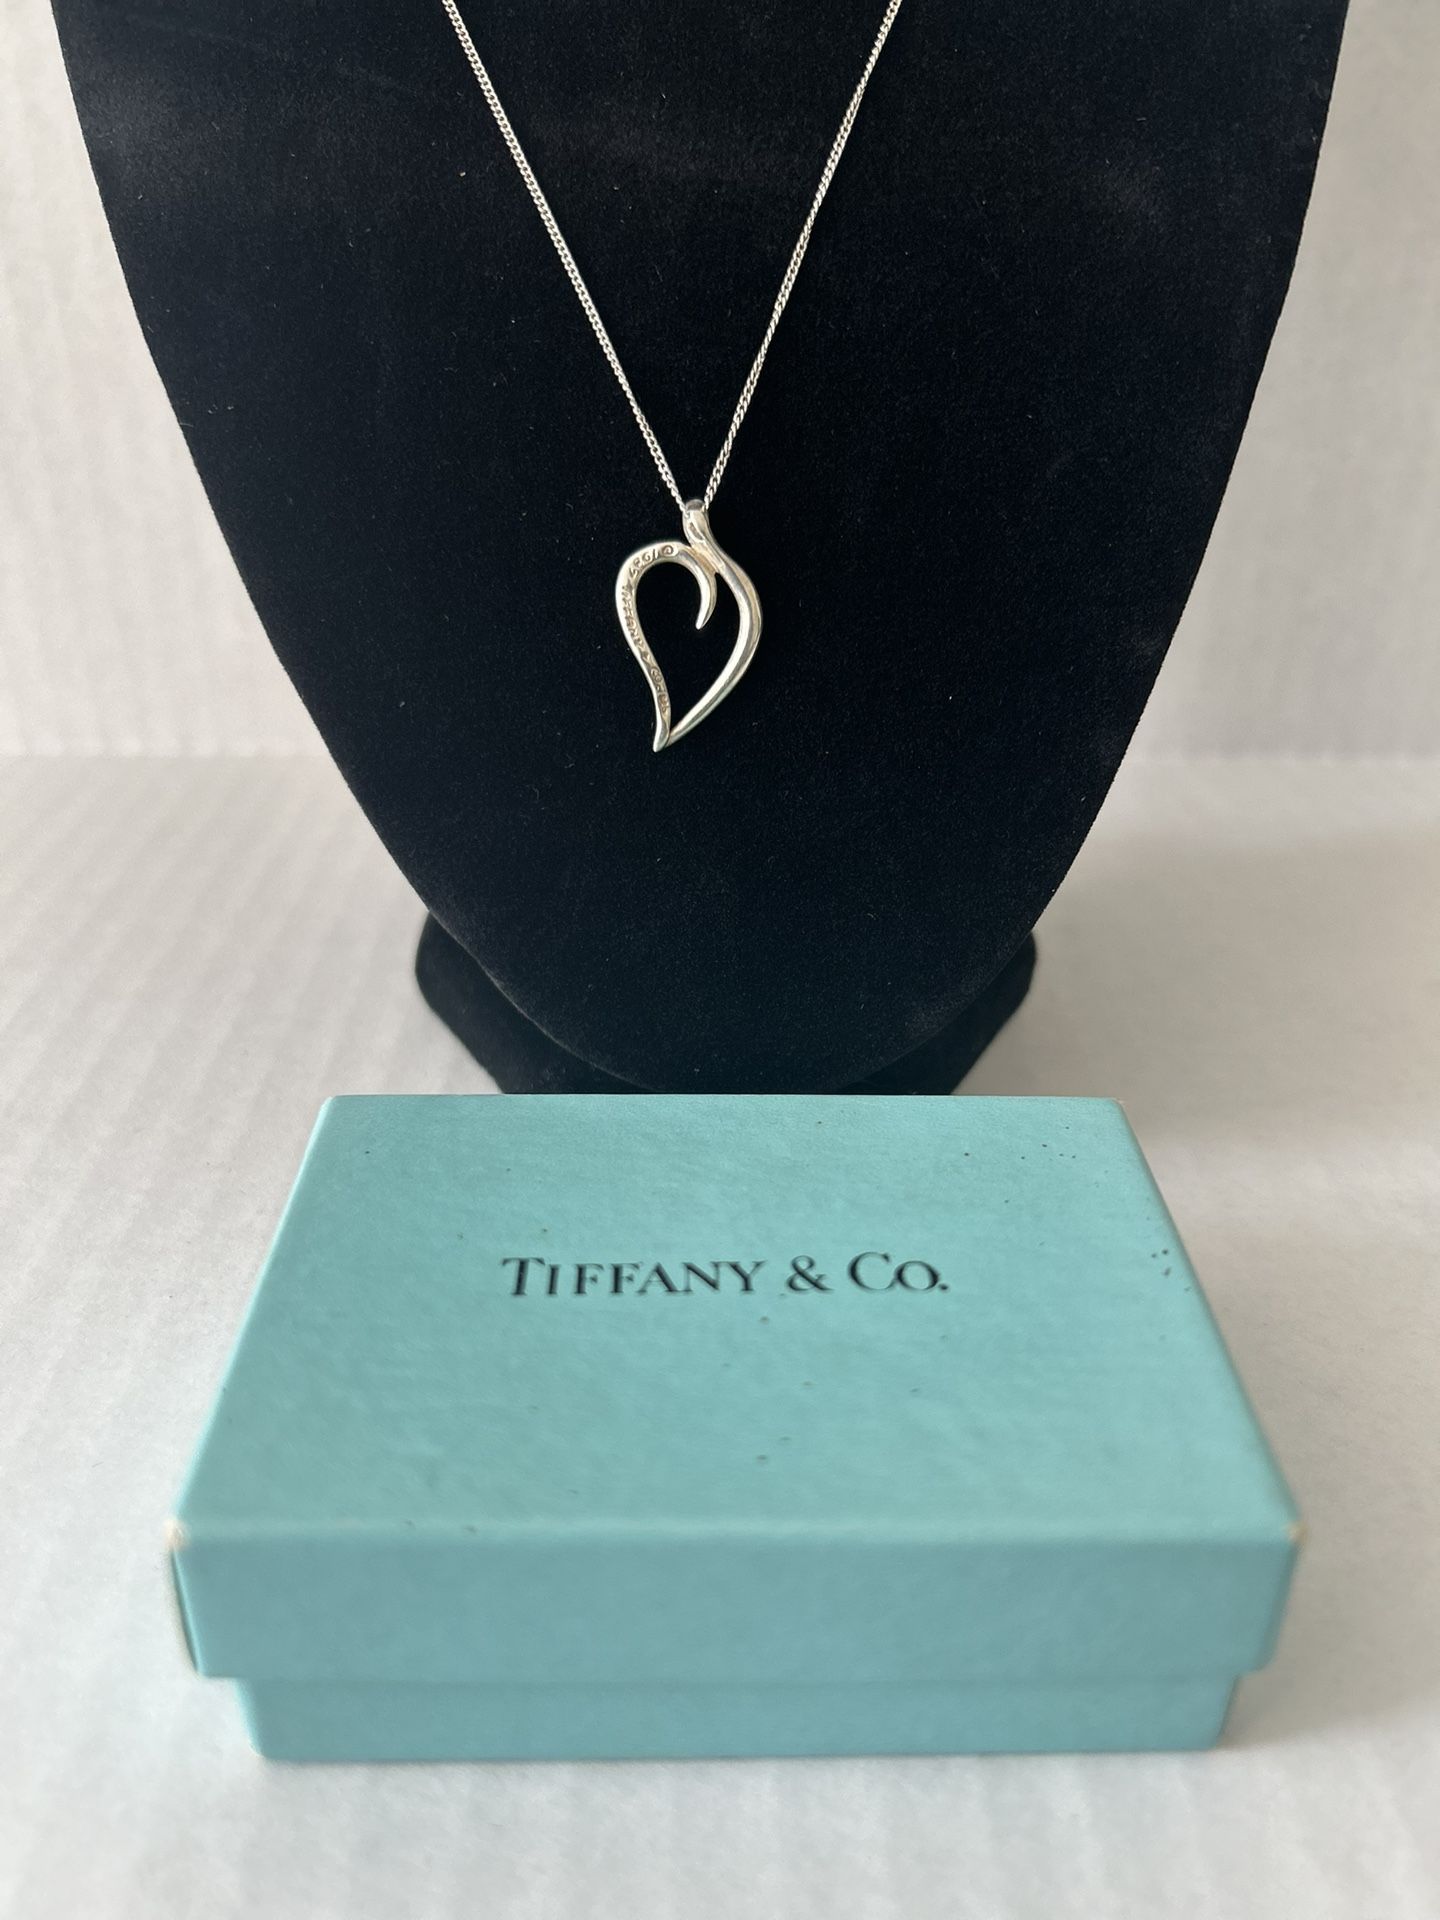 Tiffany & Co Elsa Peretti Open Leaf Pendant Necklace Silver 925 women jewelry 